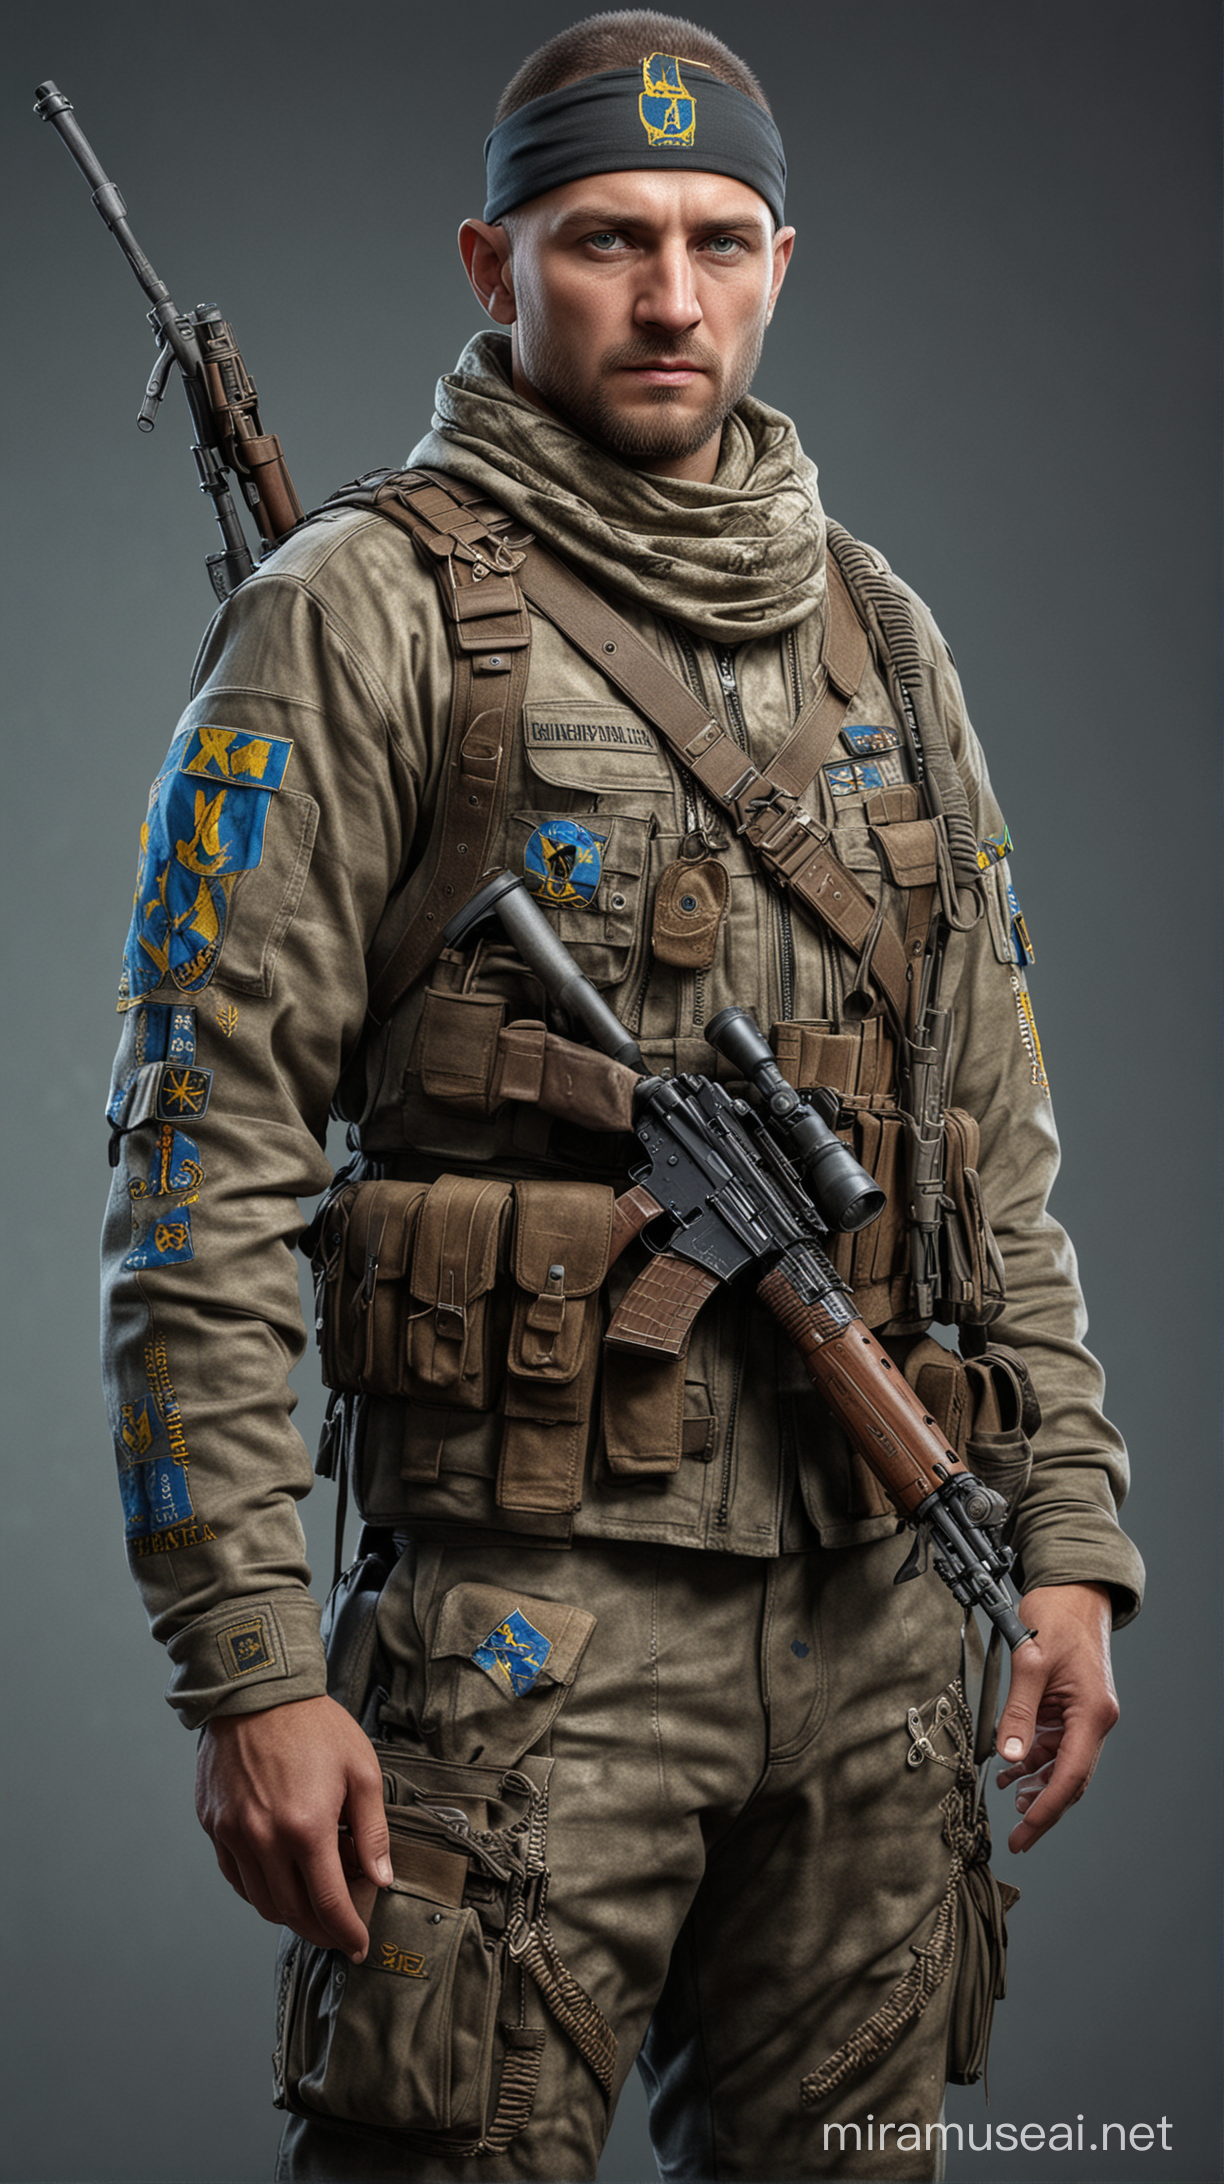 Ukrainian sniper with Ukrainian symbols on his clothes, full-length hyper-realistic.